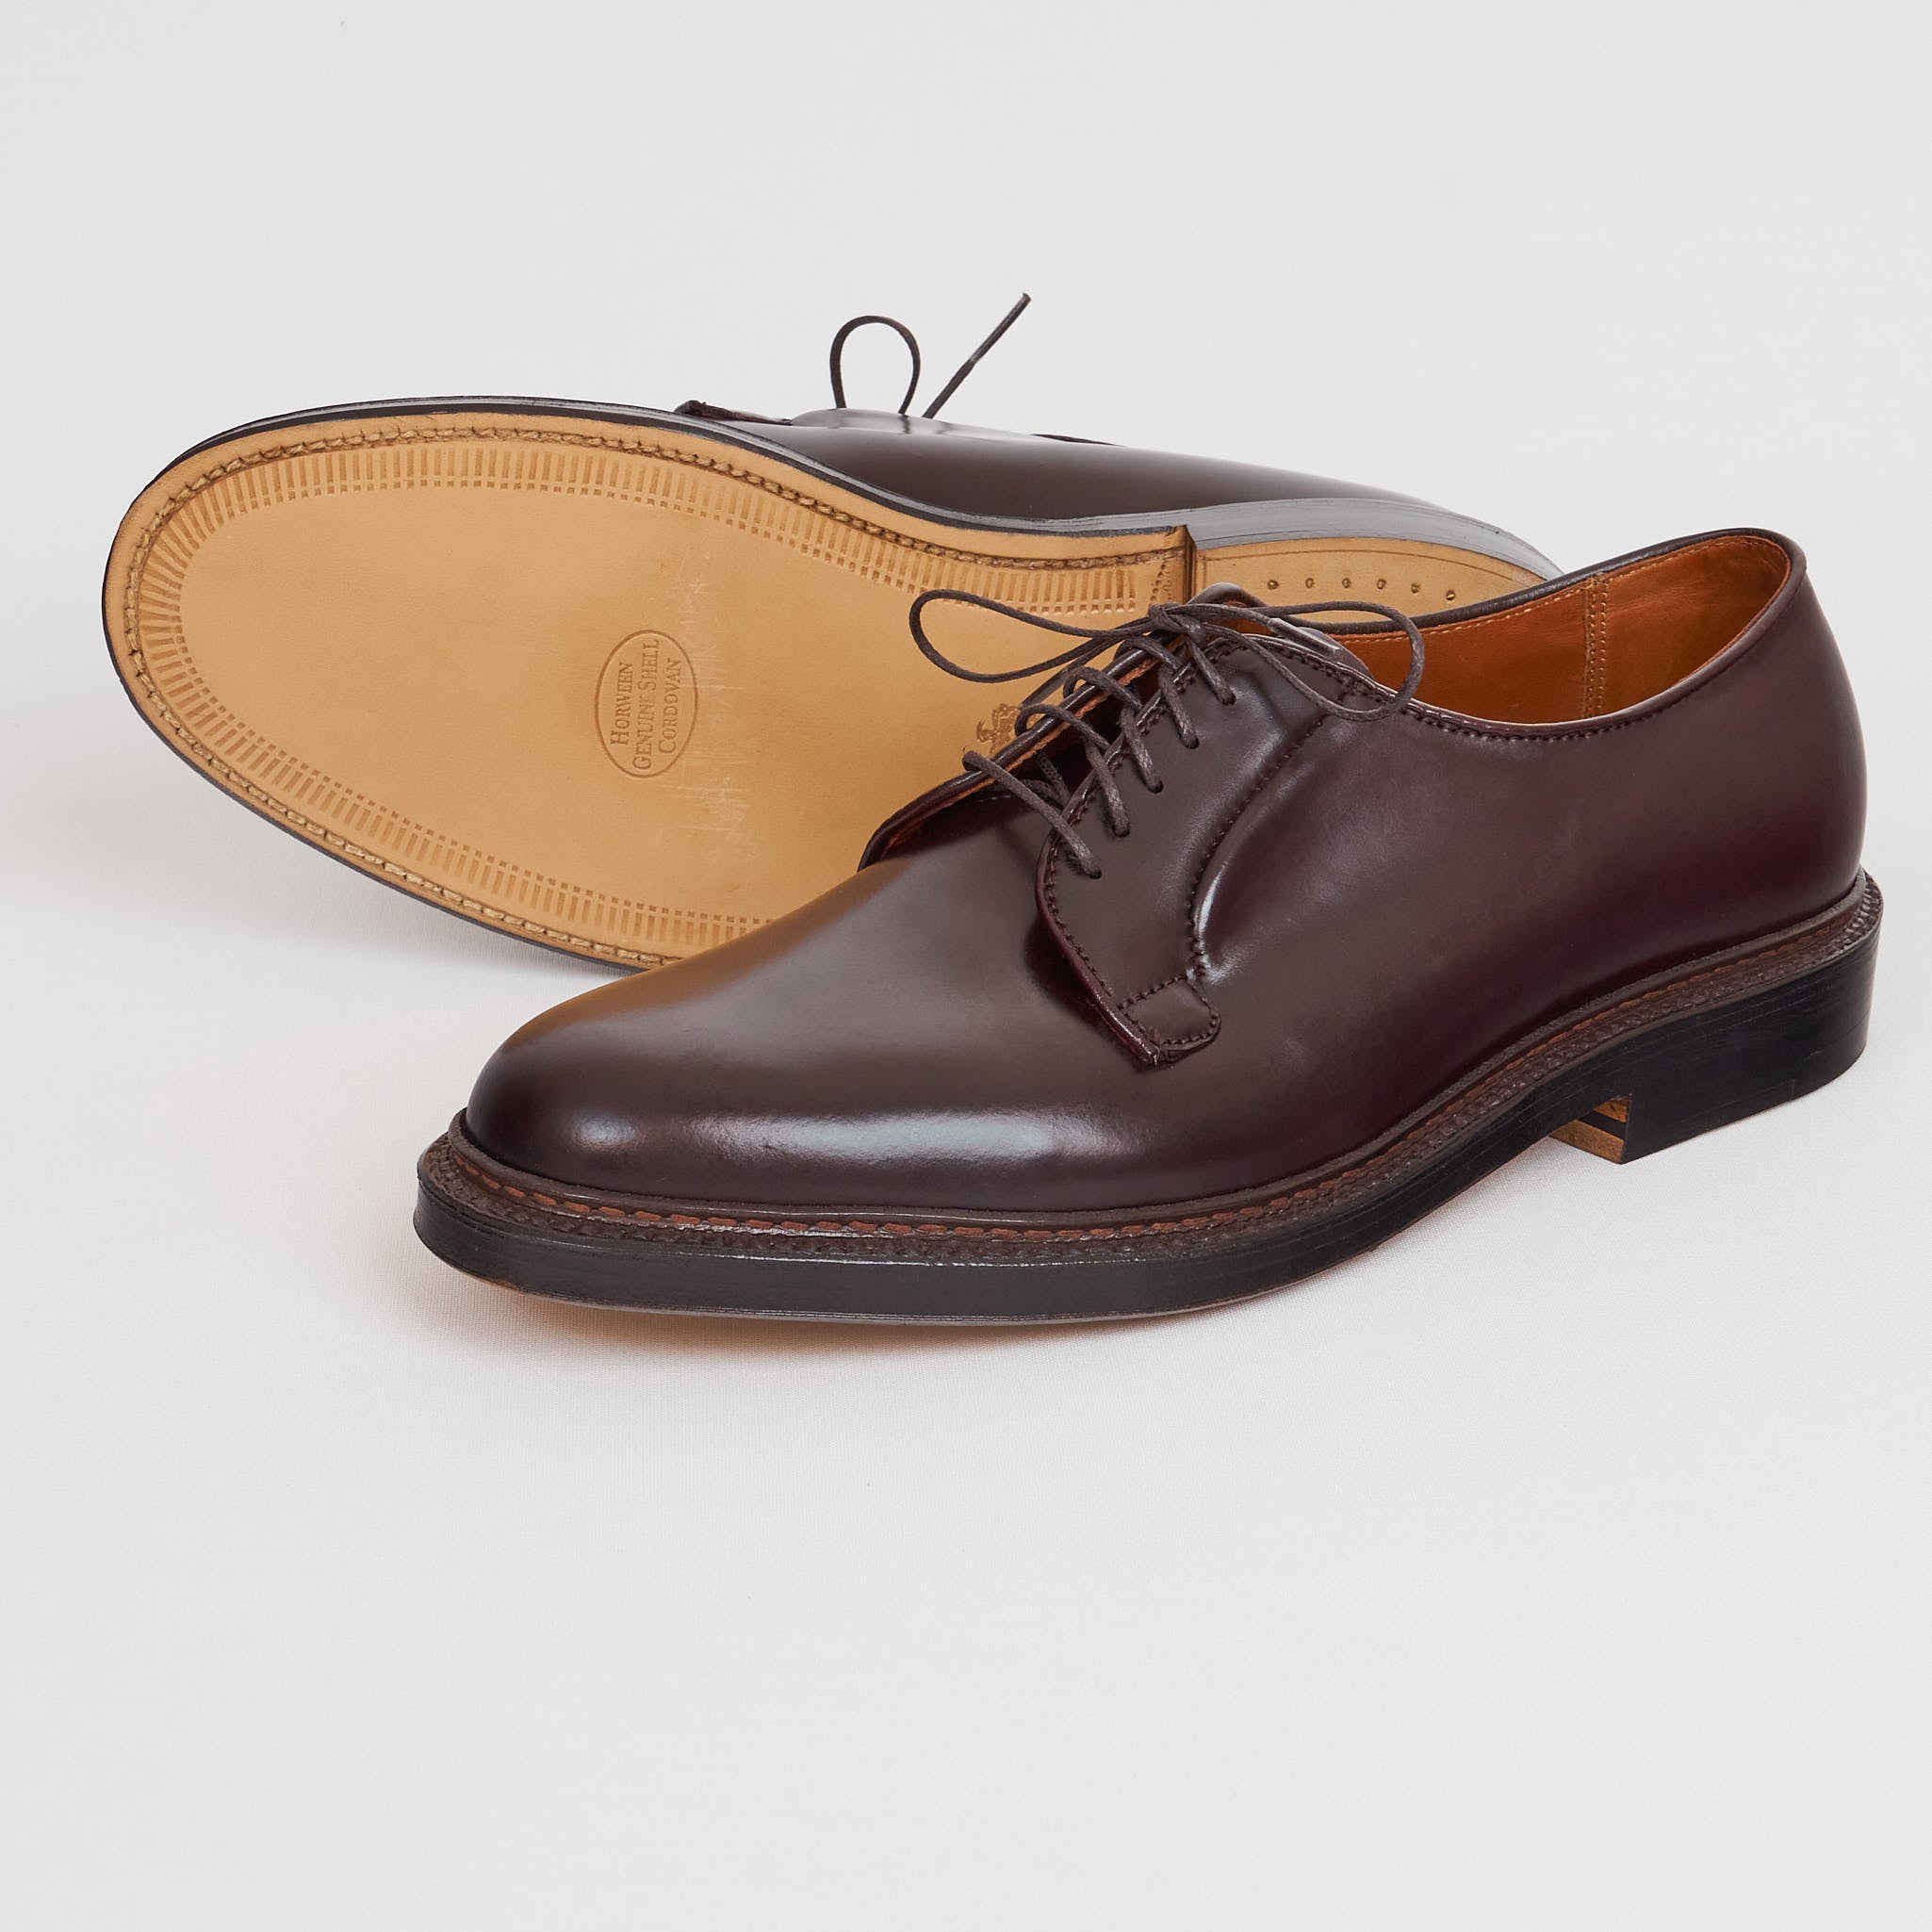 Alden Classic Shoes Cordovan - DeeCee style